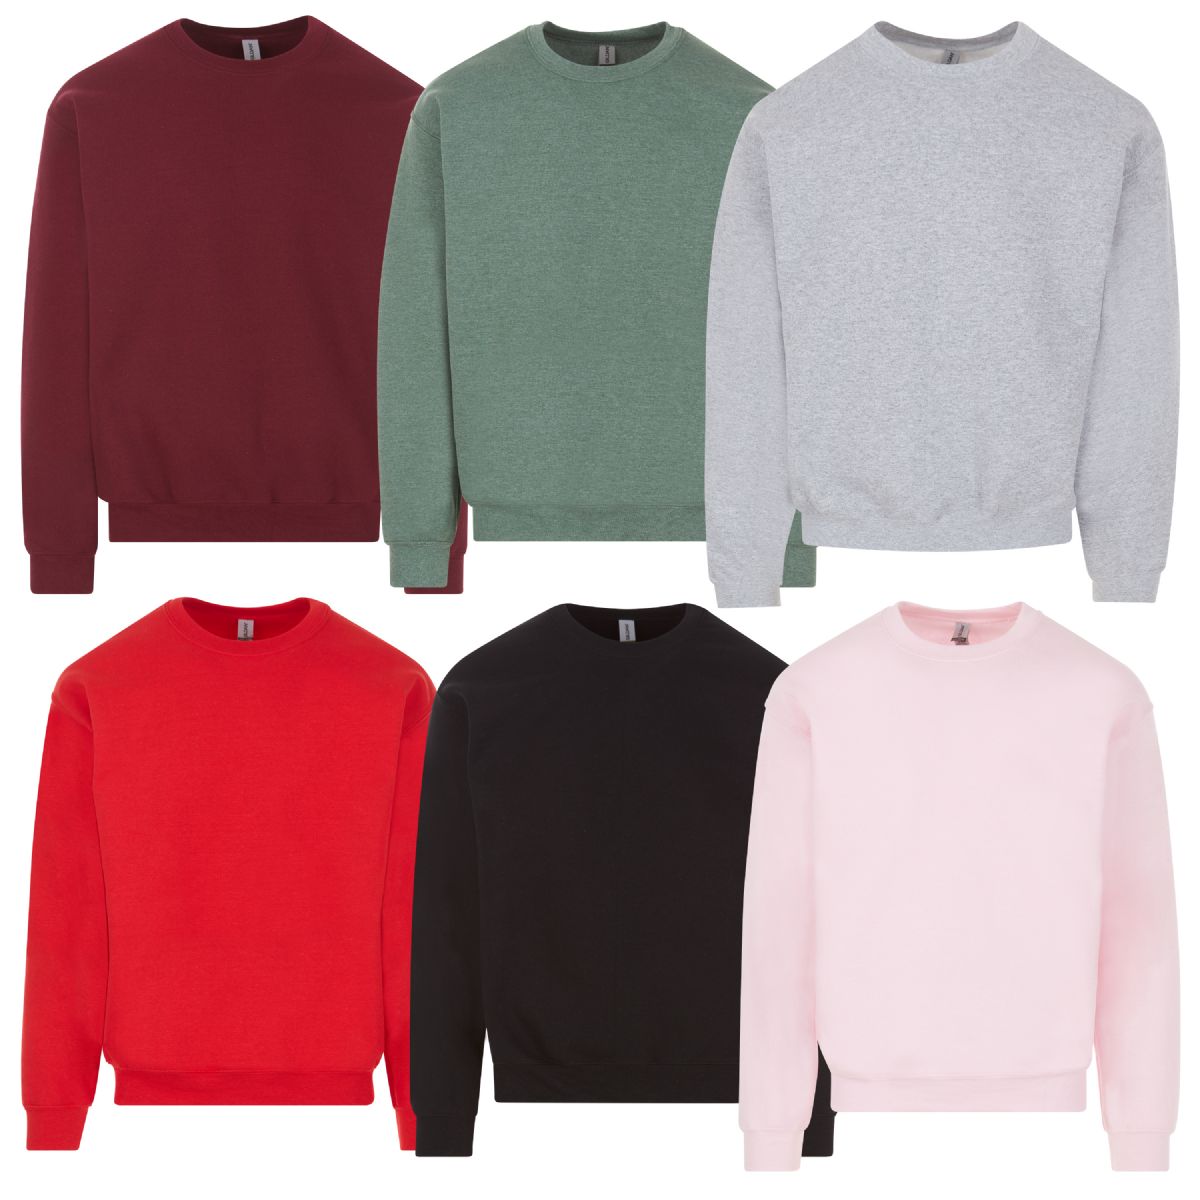 12 Pieces of Gildan Unisex Assorted Colors Fleece Sweat Shirts Size Small